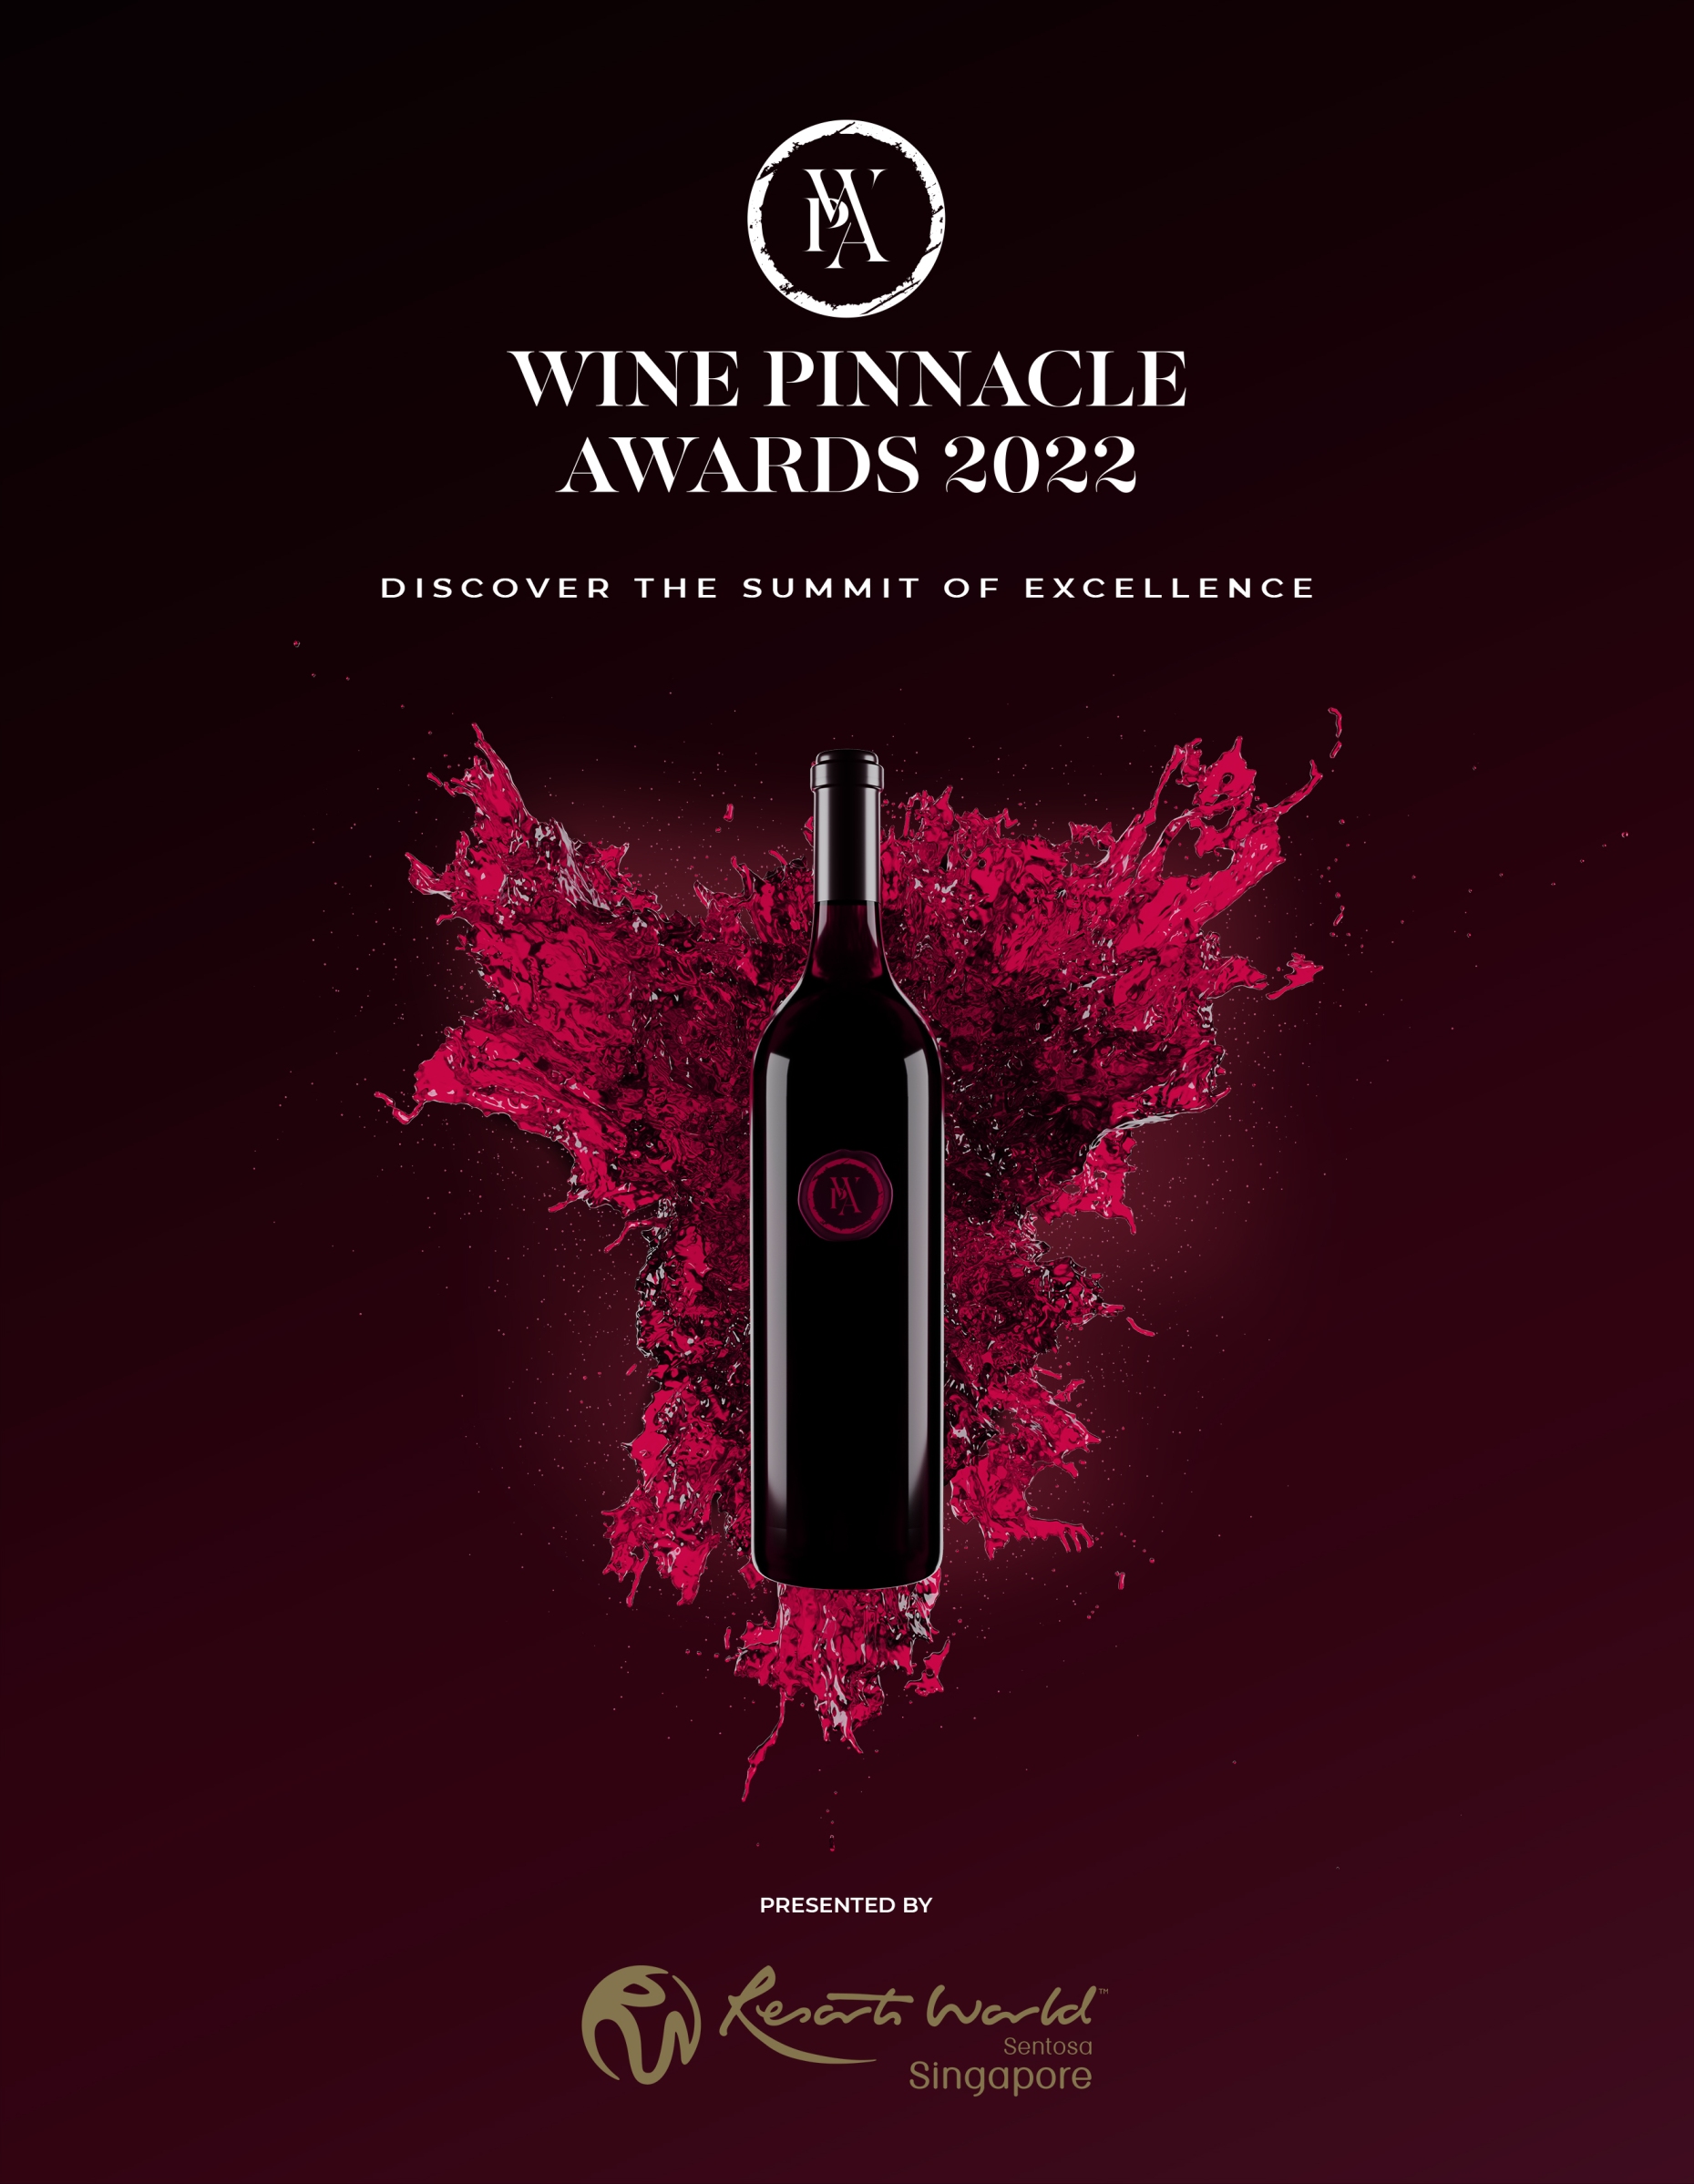 , Wine Pinnacle Awards 2022 is back at Resorts World Sentosa, Singapore